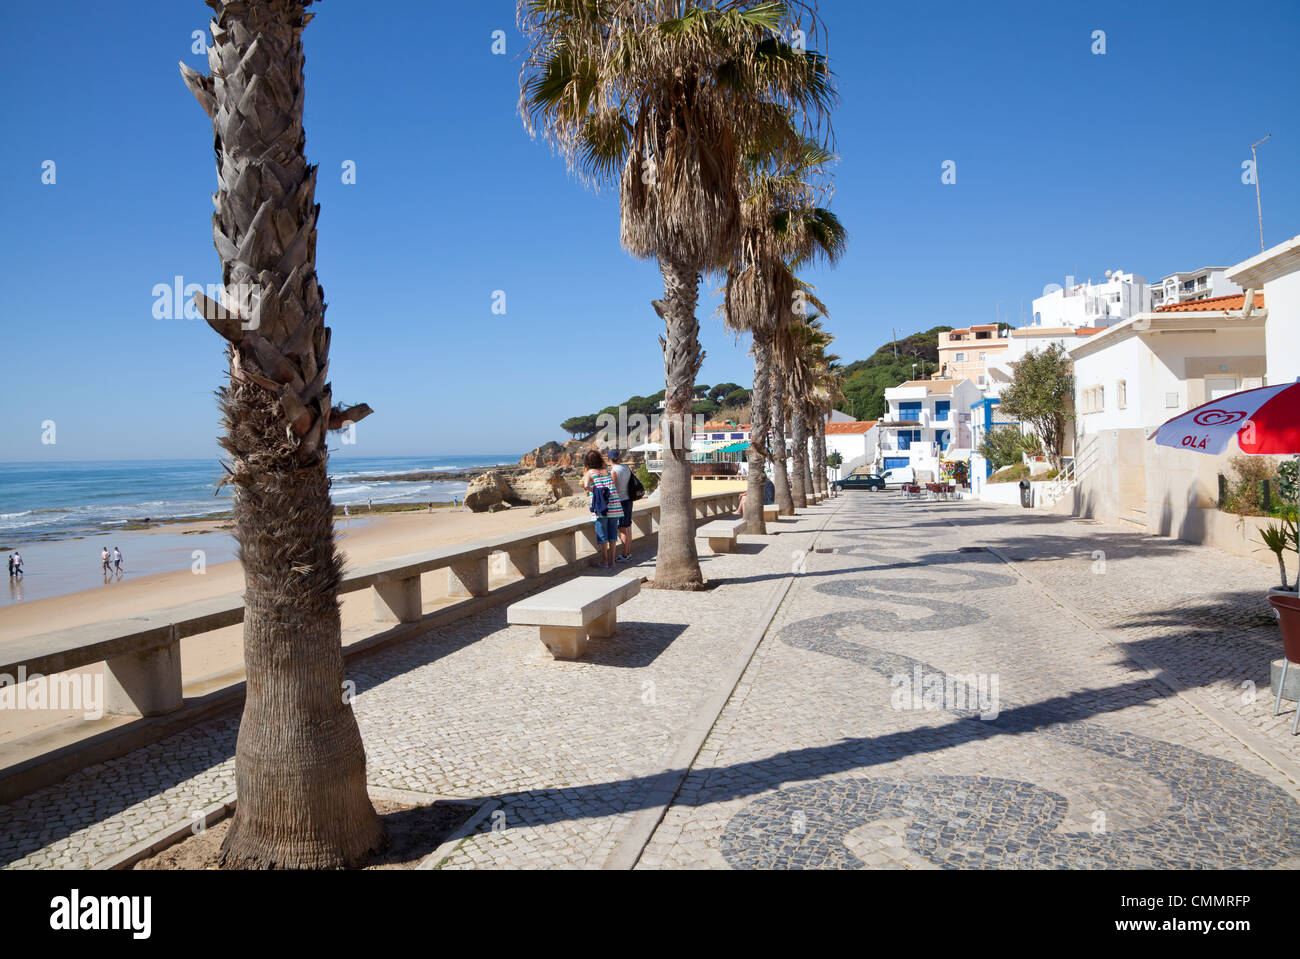 Olhos d'Agua, Algarve. Stock Photo